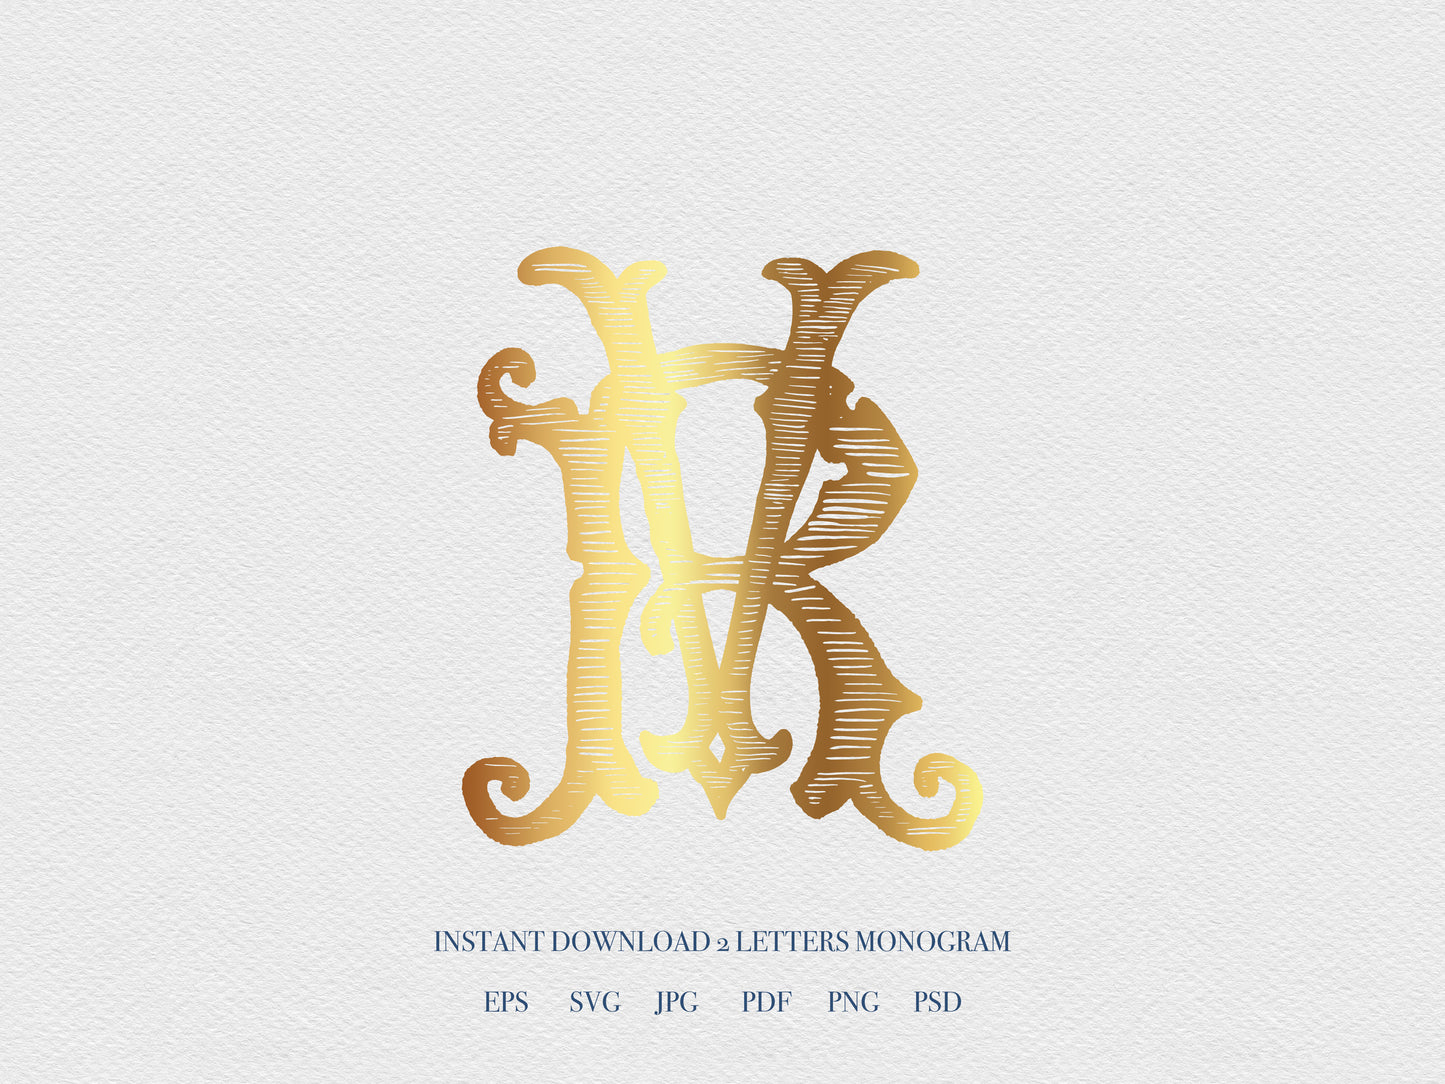 2 Letter Monogram with Letters RV VR | Digital Download - Wedding Monogram SVG, Personal Logo, Wedding Logo for Wedding Invitations